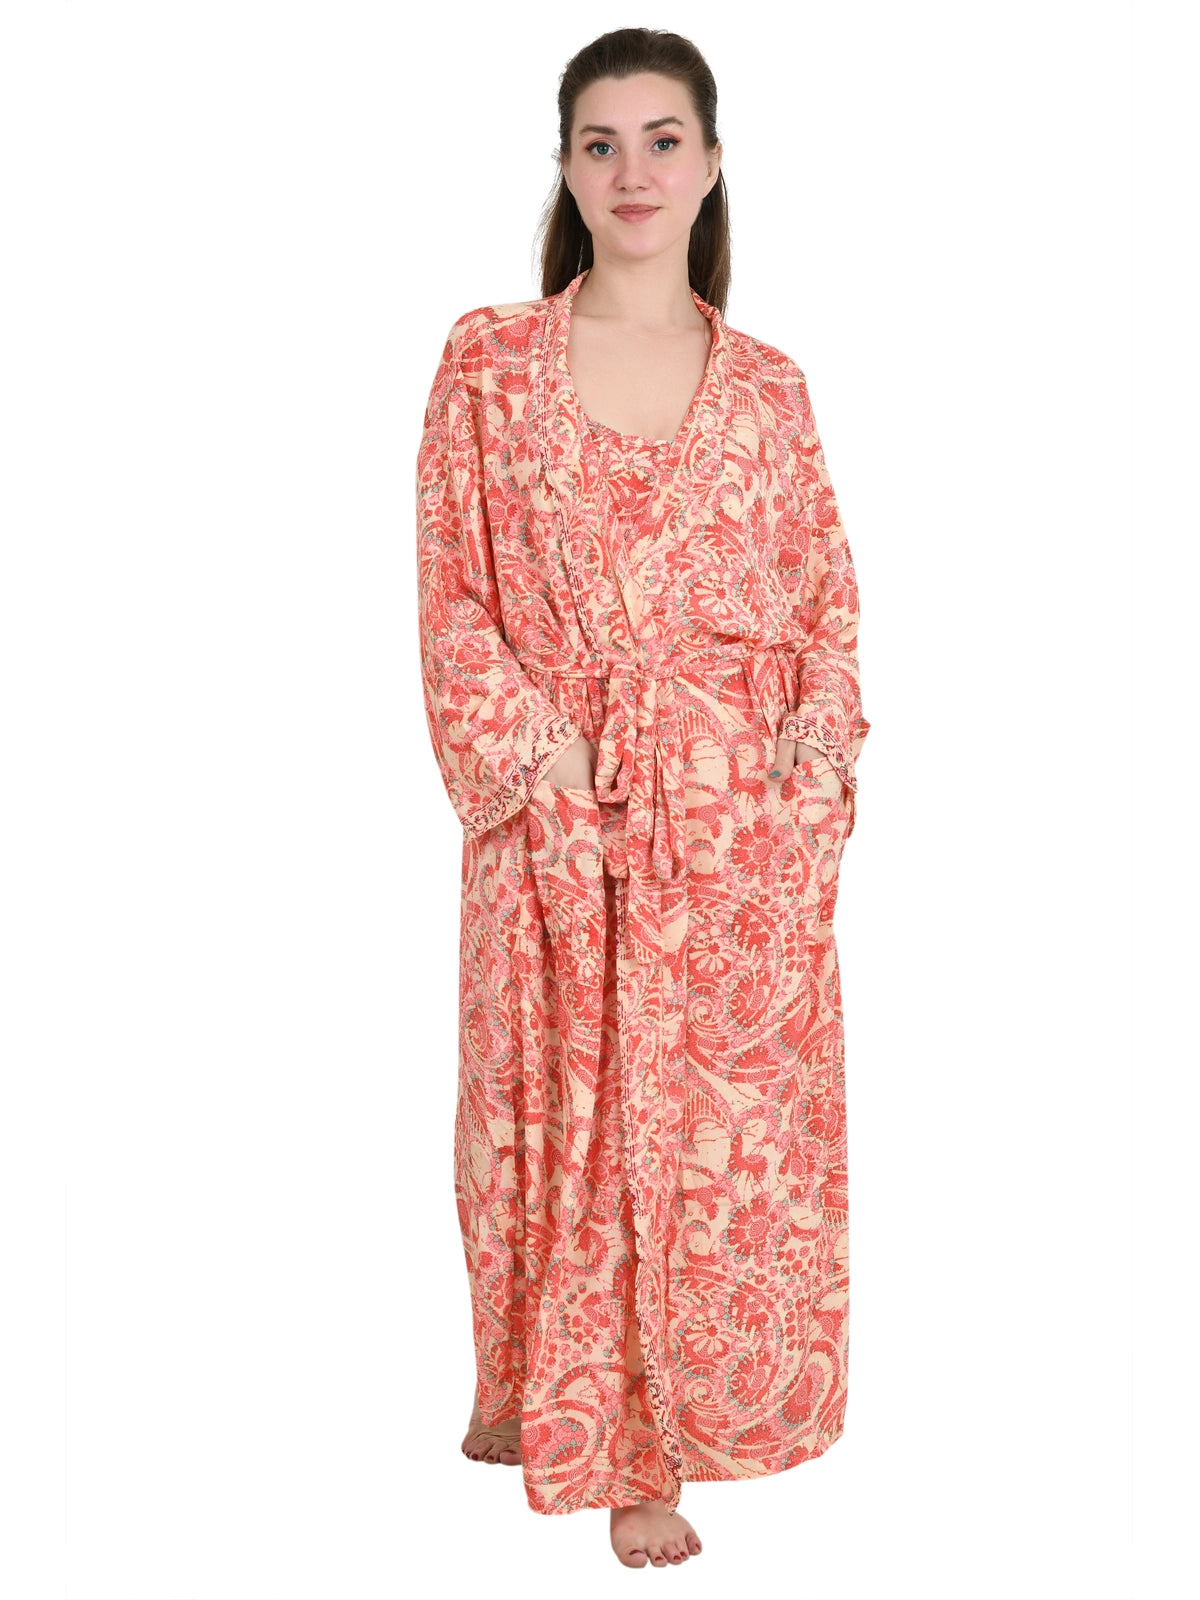 Silky Sari Pyjama Kimono Cami Top Boxer Set of 3 Night Suit Sleep Wear Luxury Lounge Boho Dress Royal Beach Cover Up Floral Paisley Cardigan Gift For Her